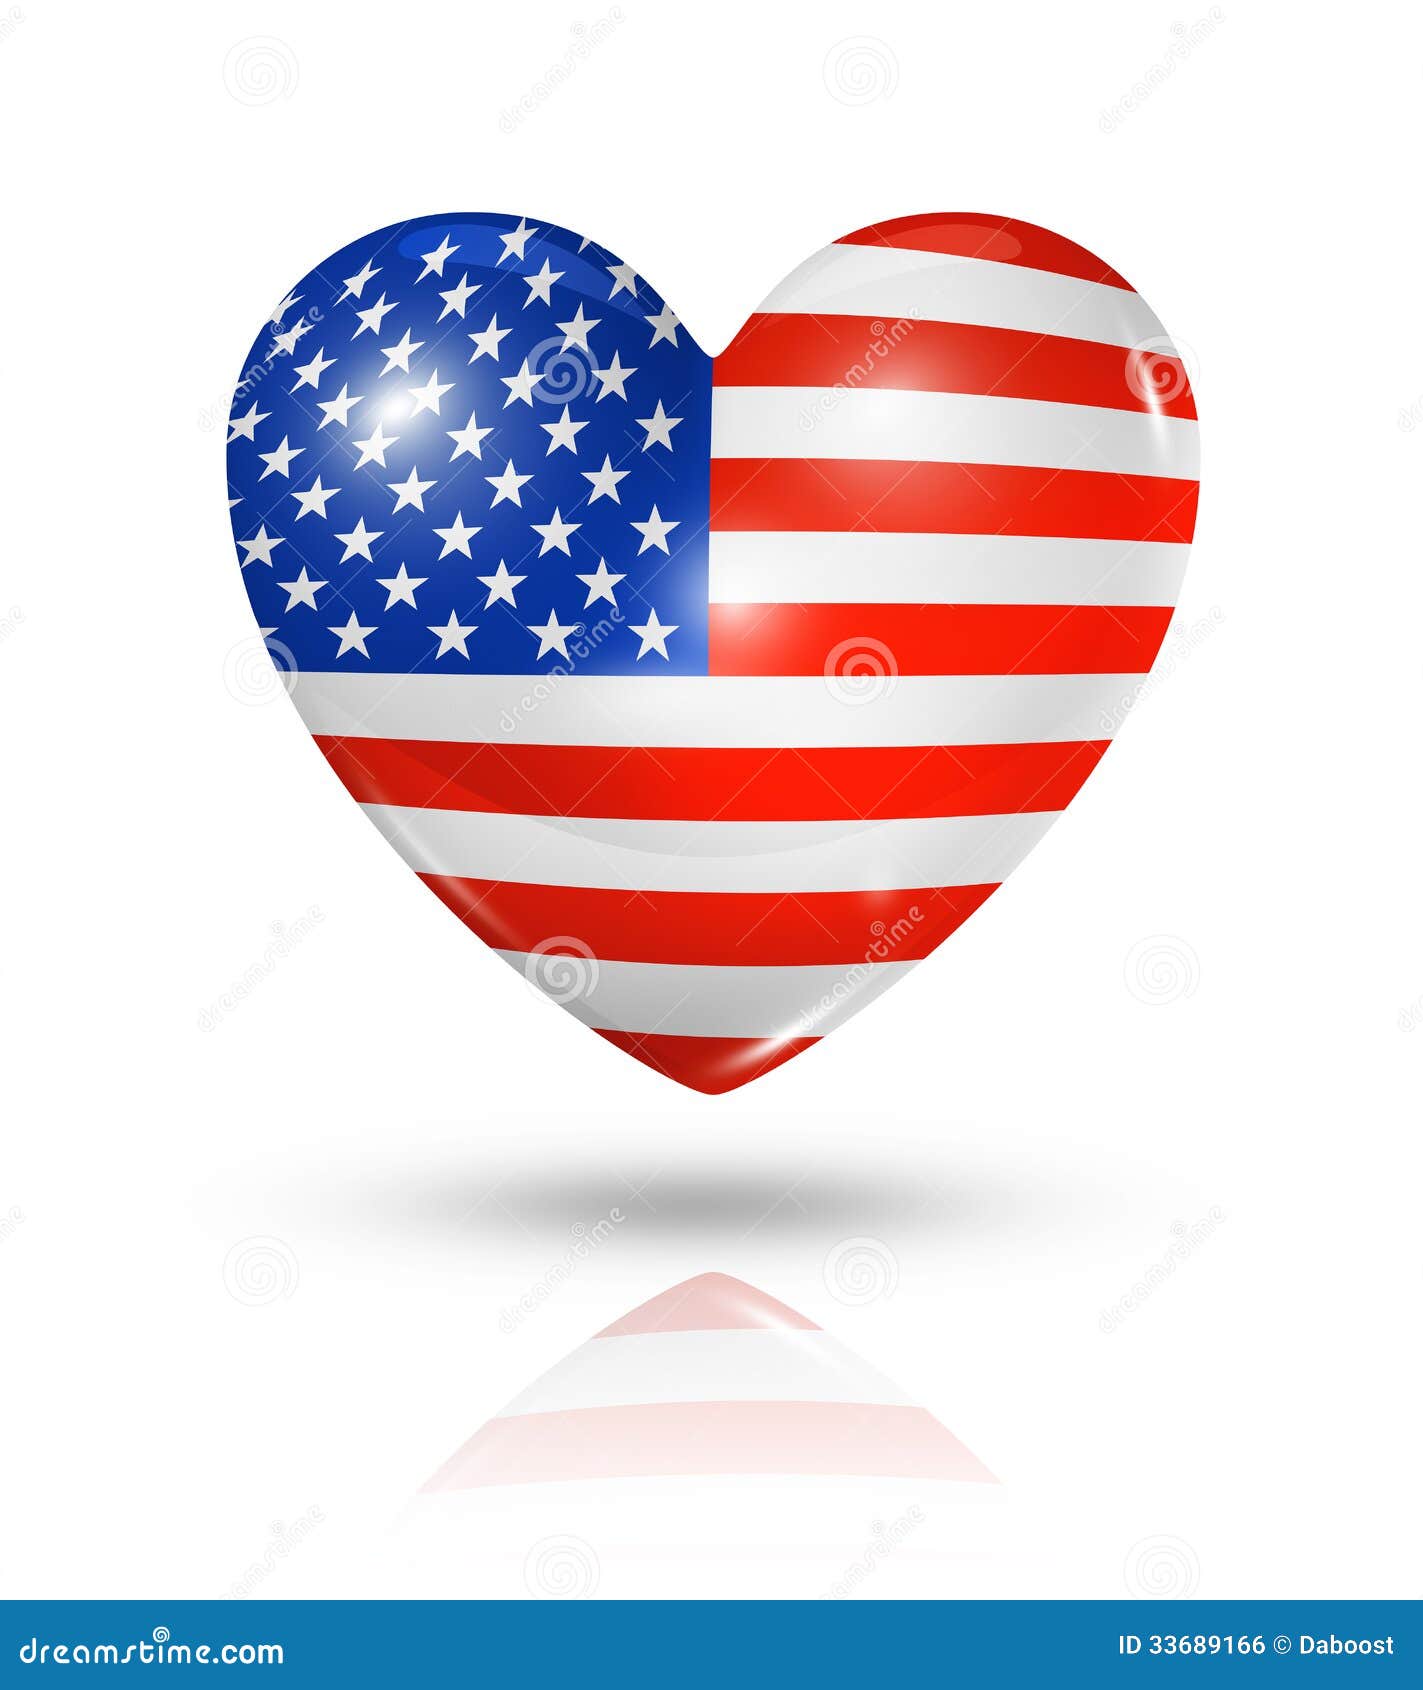 Love USA, Heart Flag Icon Royalty Free Stock Image - Image: 33689166